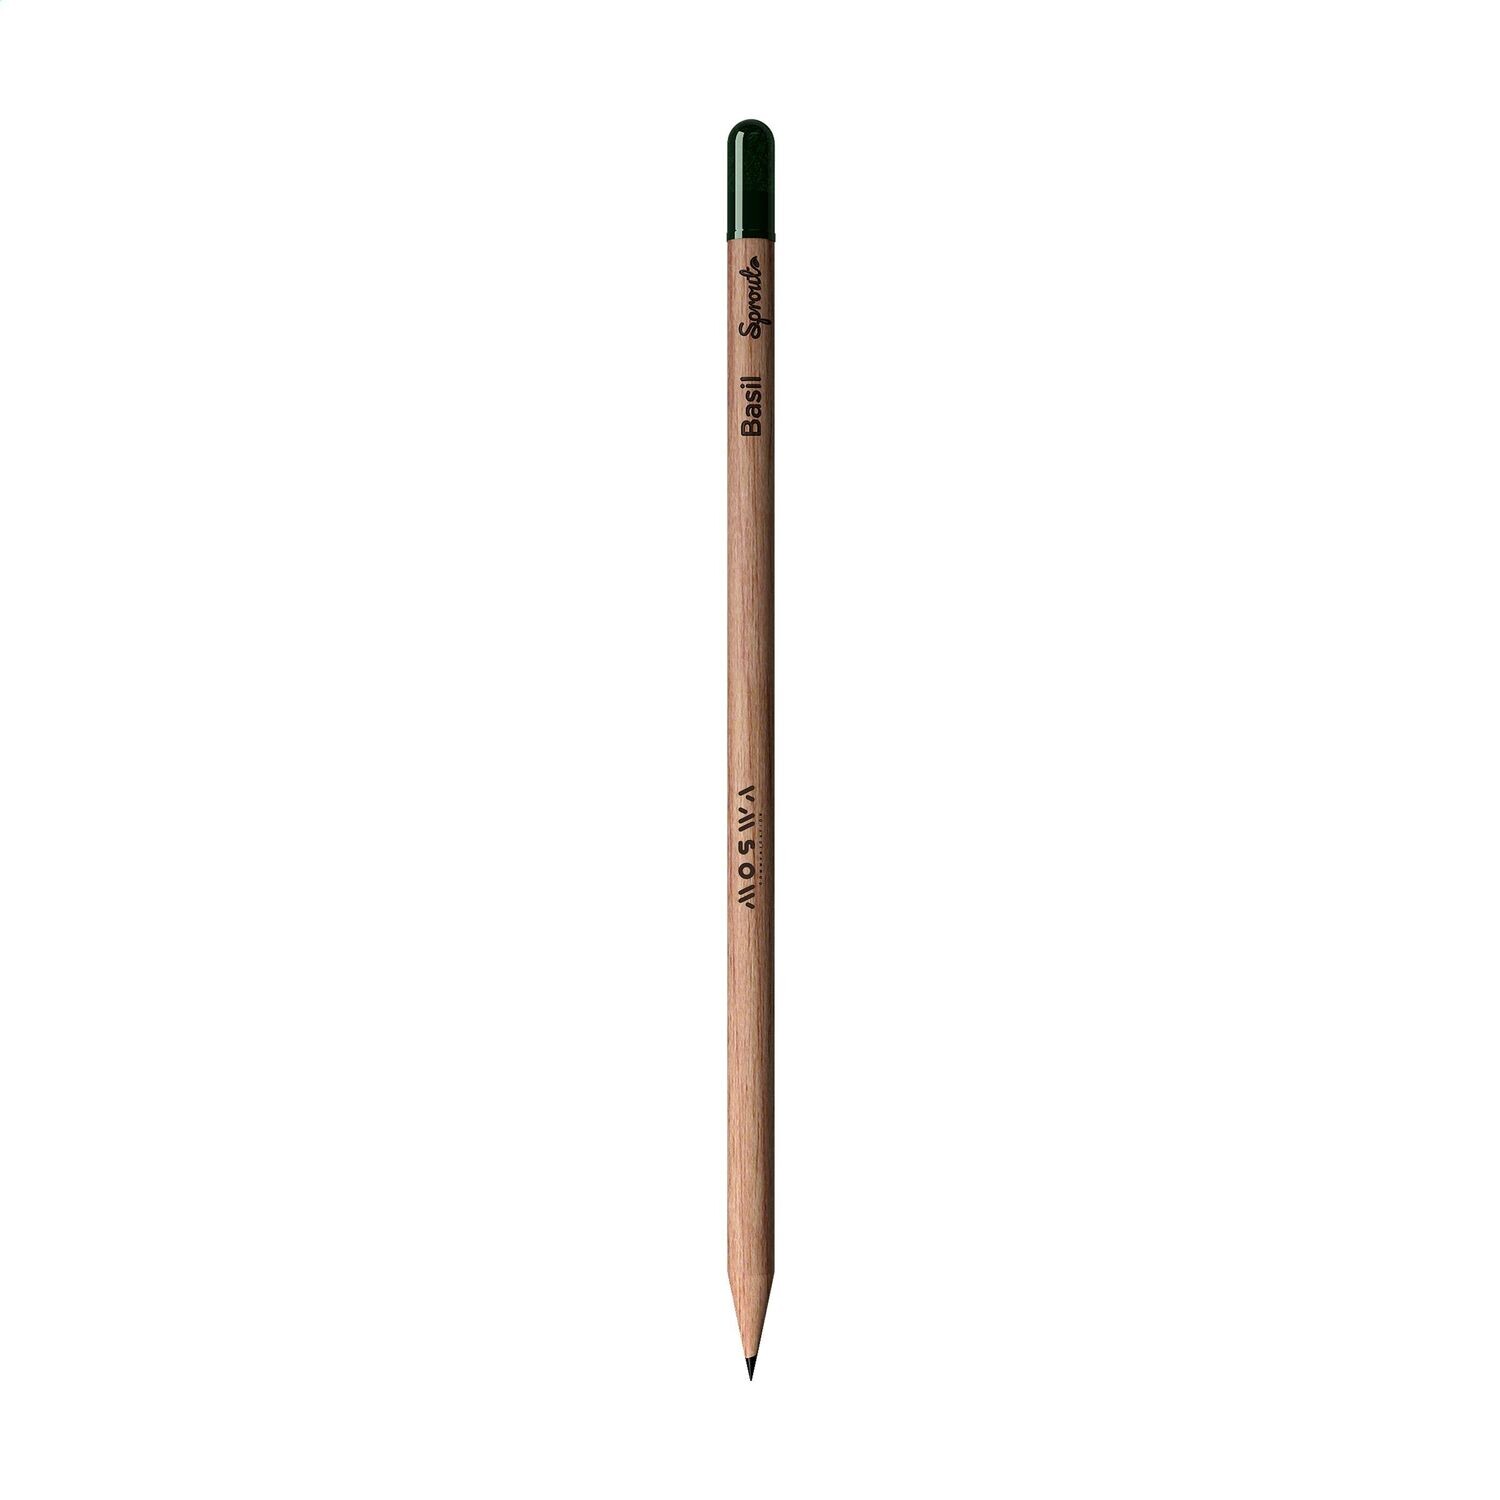 Sproutworld Sharpened Pencil spisset blyant